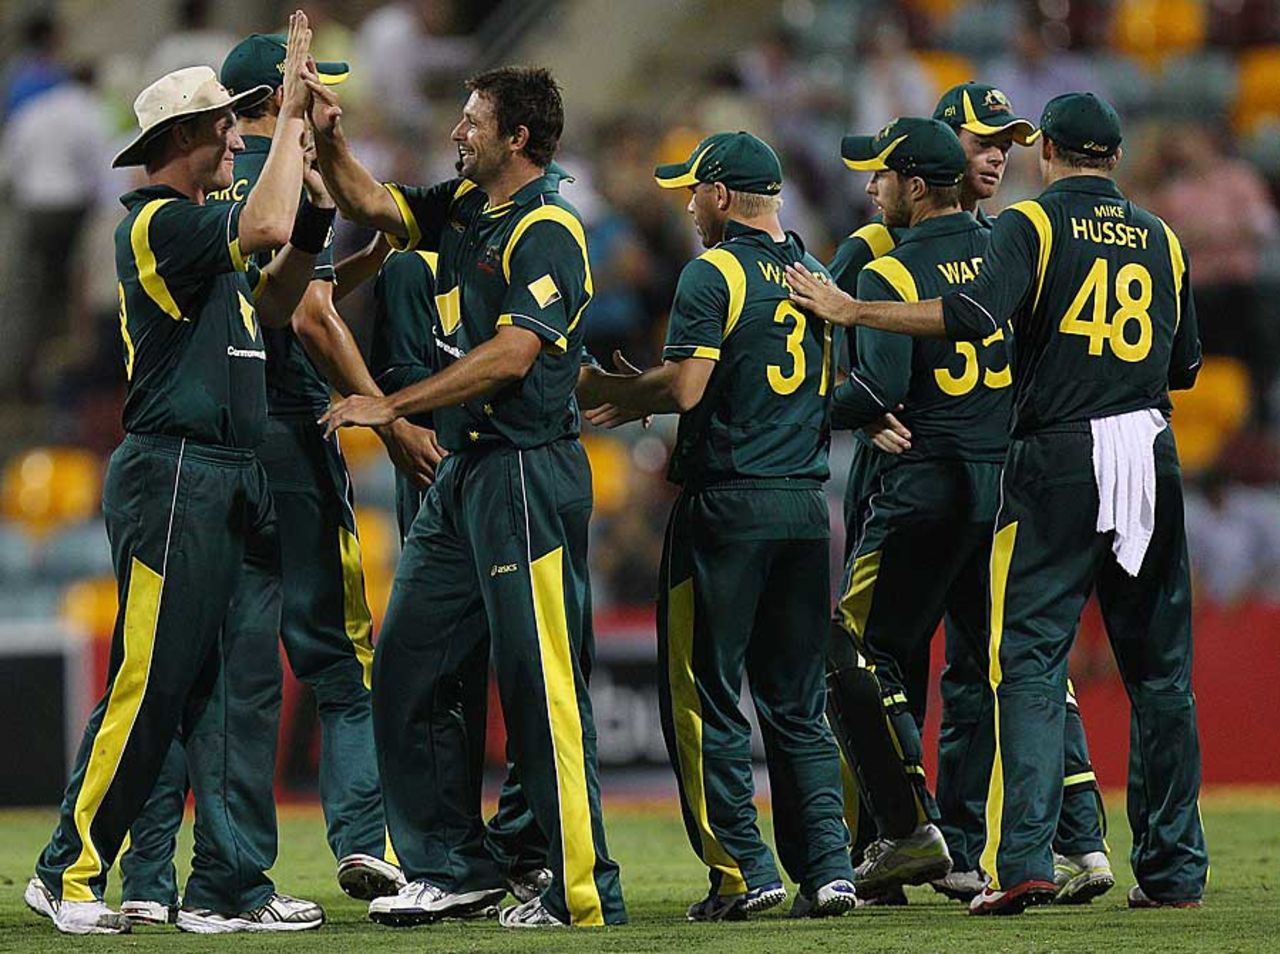 Ben Hilfenhaus led Australia's charge with a five-for, Australia v India, CB Series, Brisbane, February 19, 2012